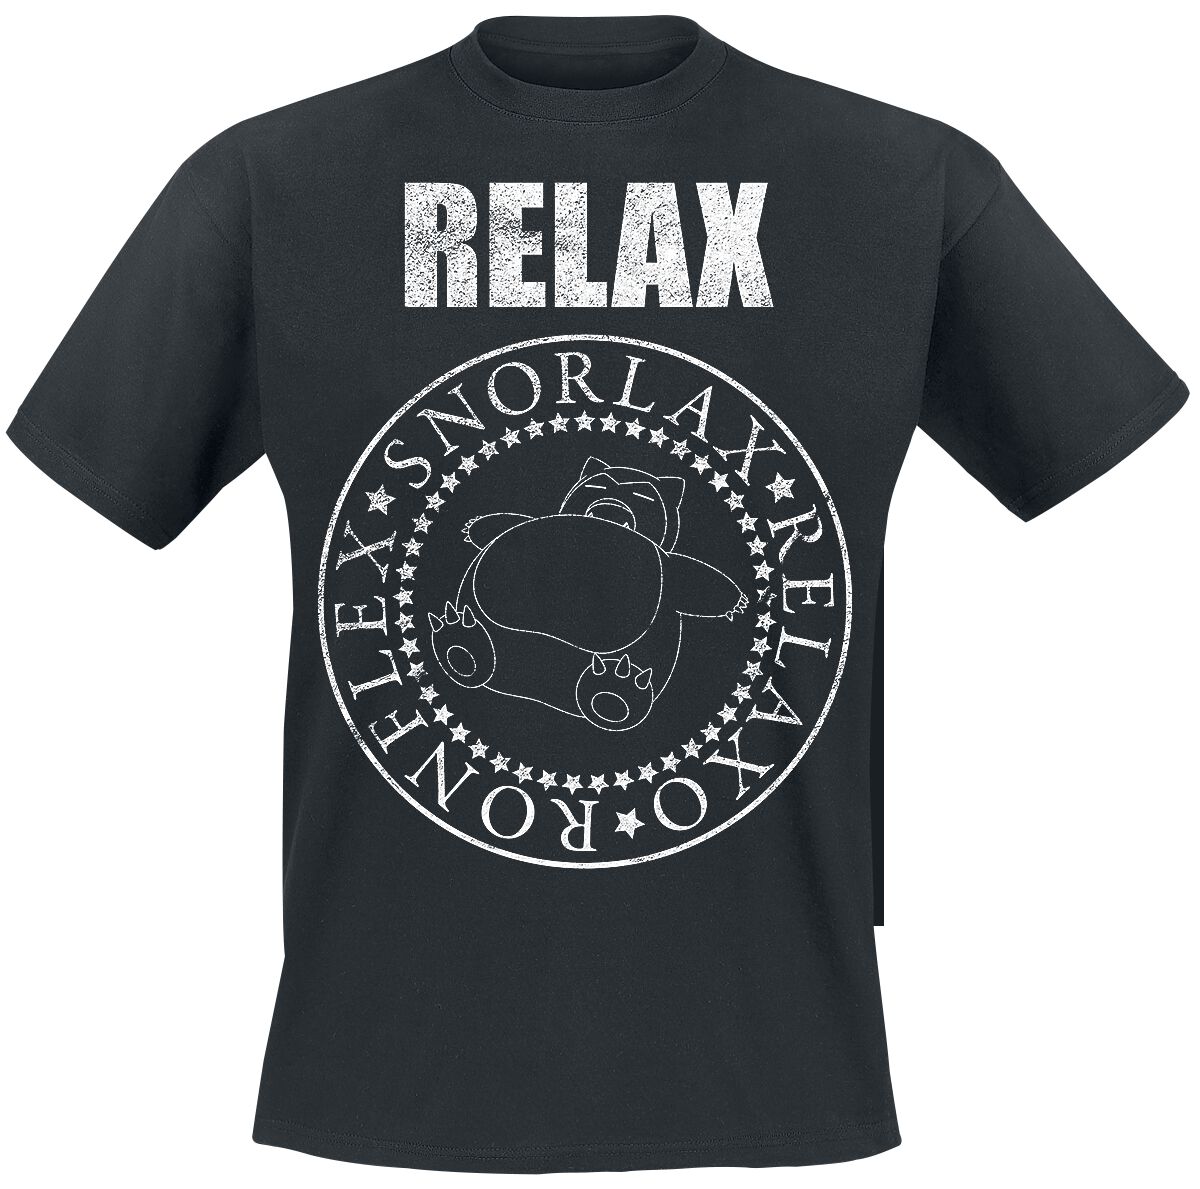 Pokémon Snorlax - Relax T-Shirt black